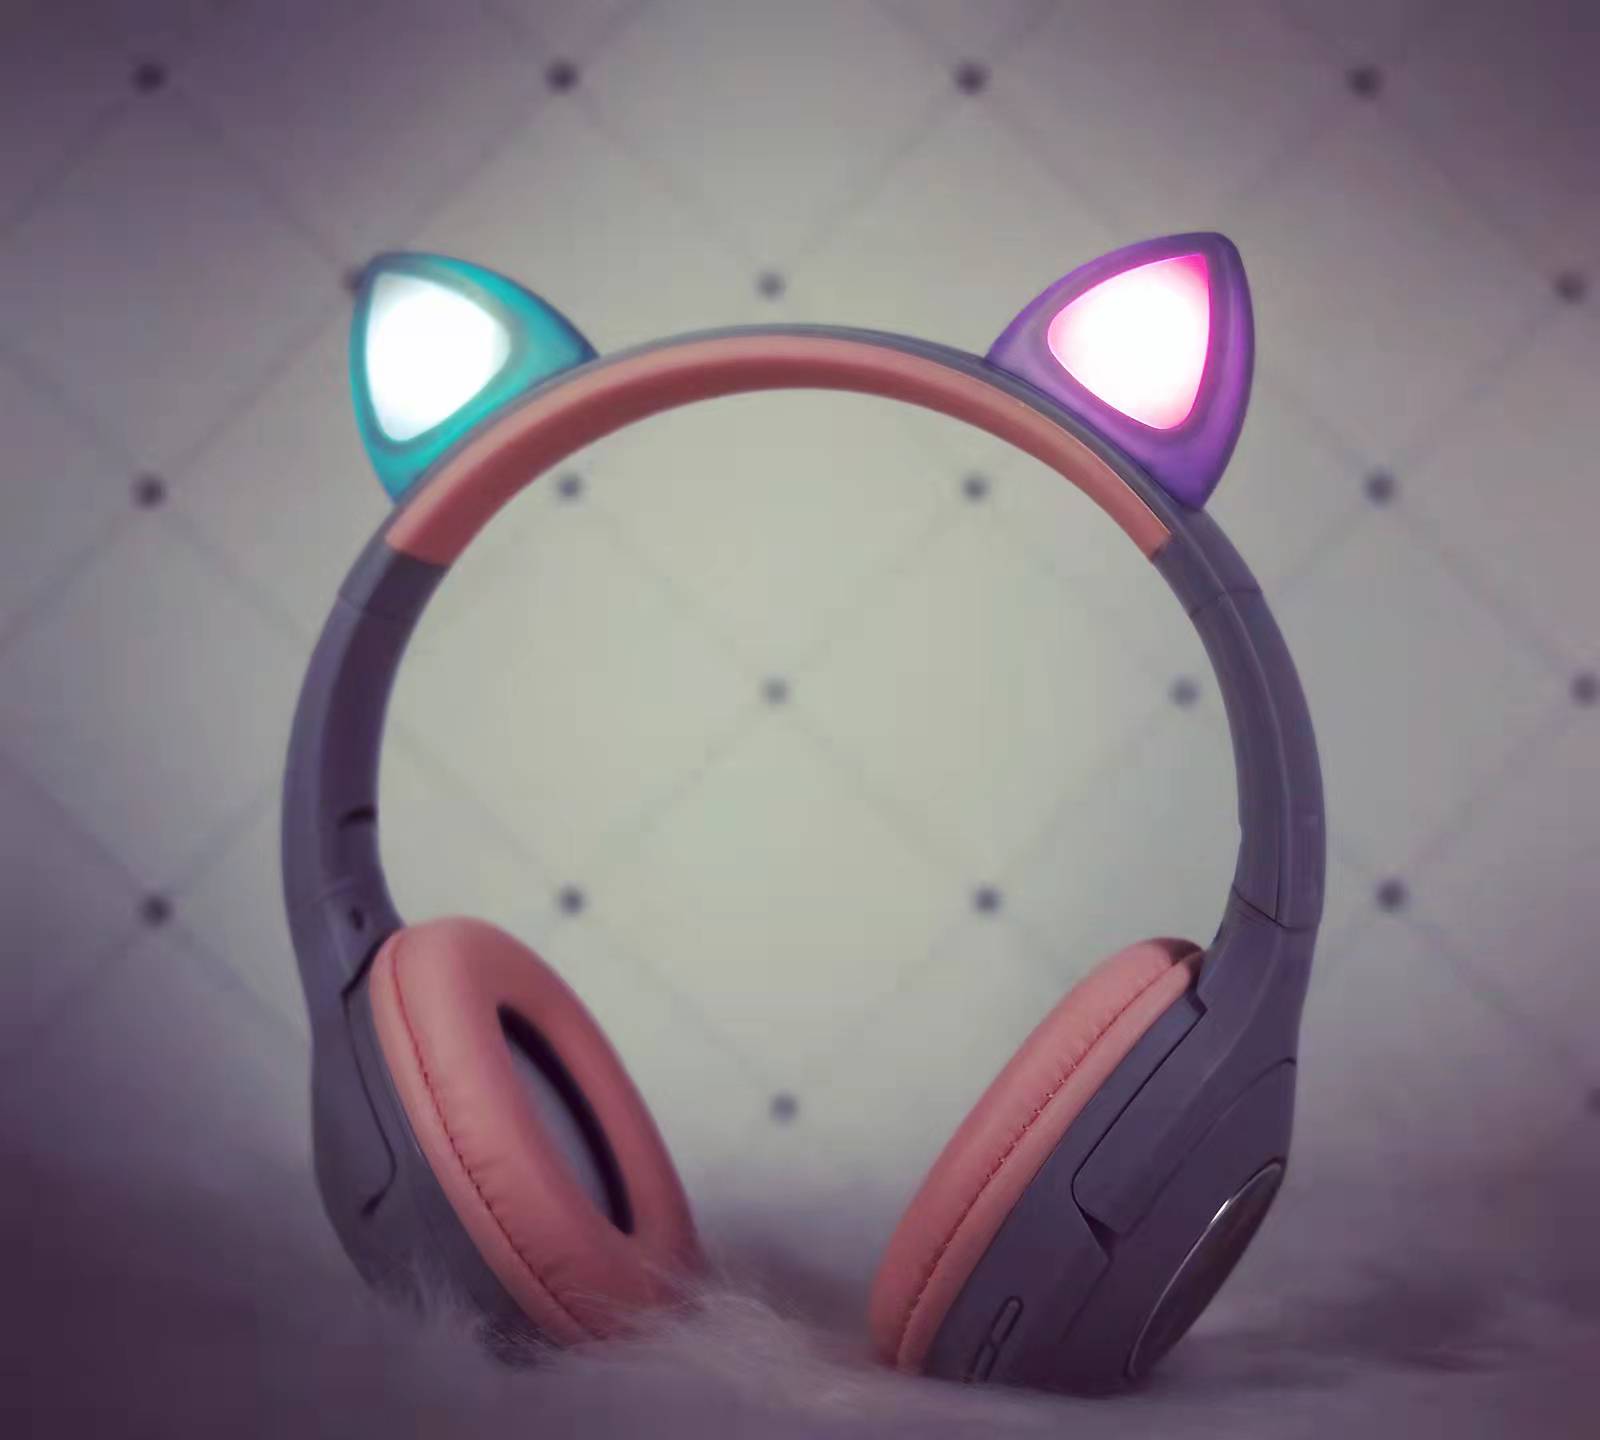 Casque de jeu Cat Ear sans fil